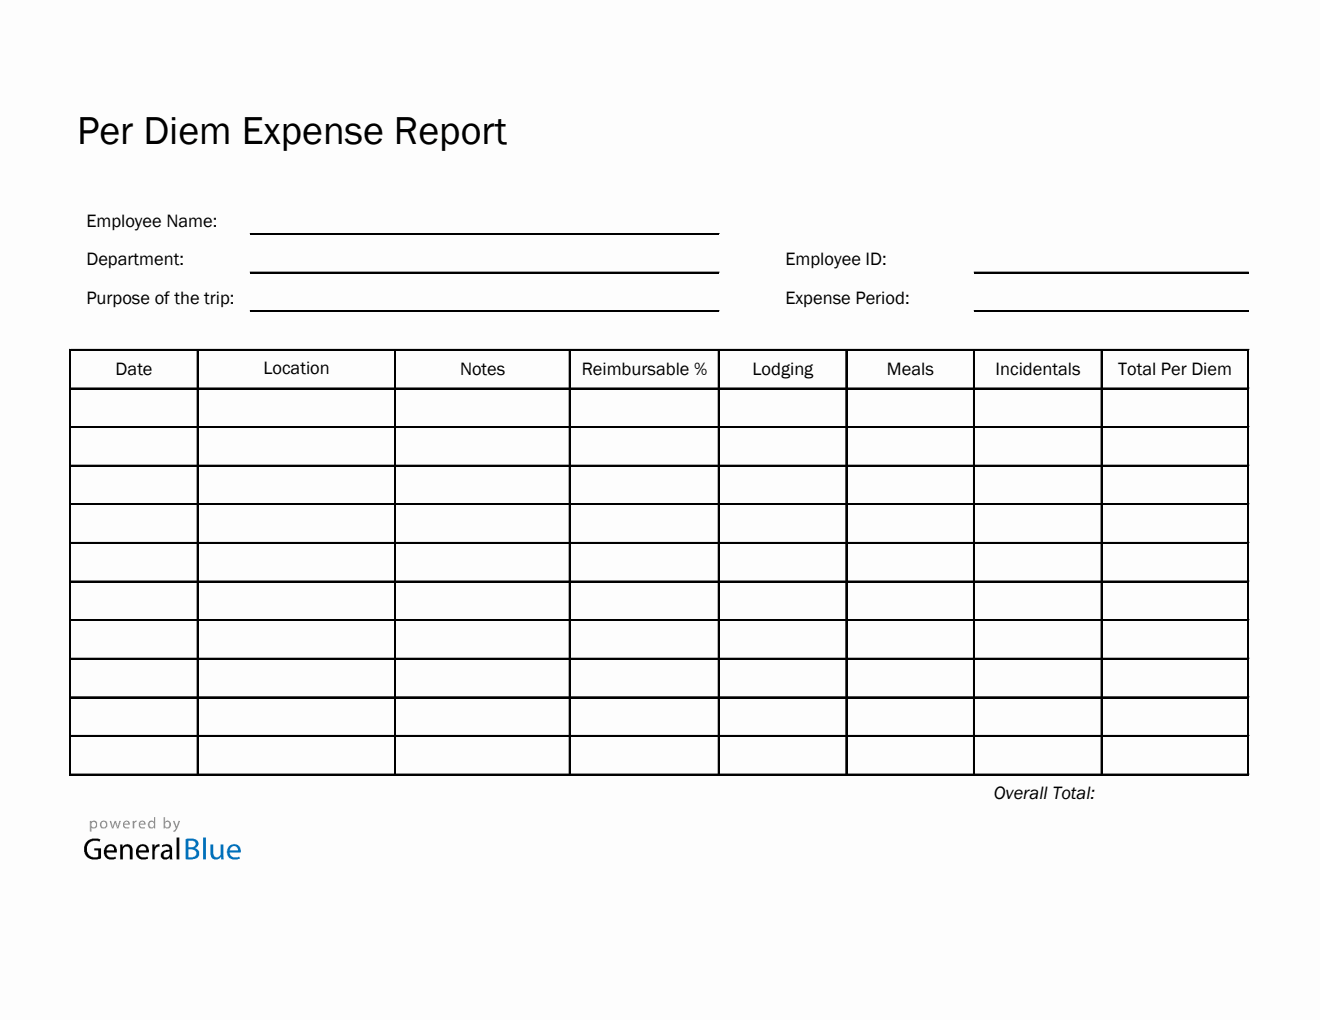 Per Diem Expense Report Template in Excel (Printable)